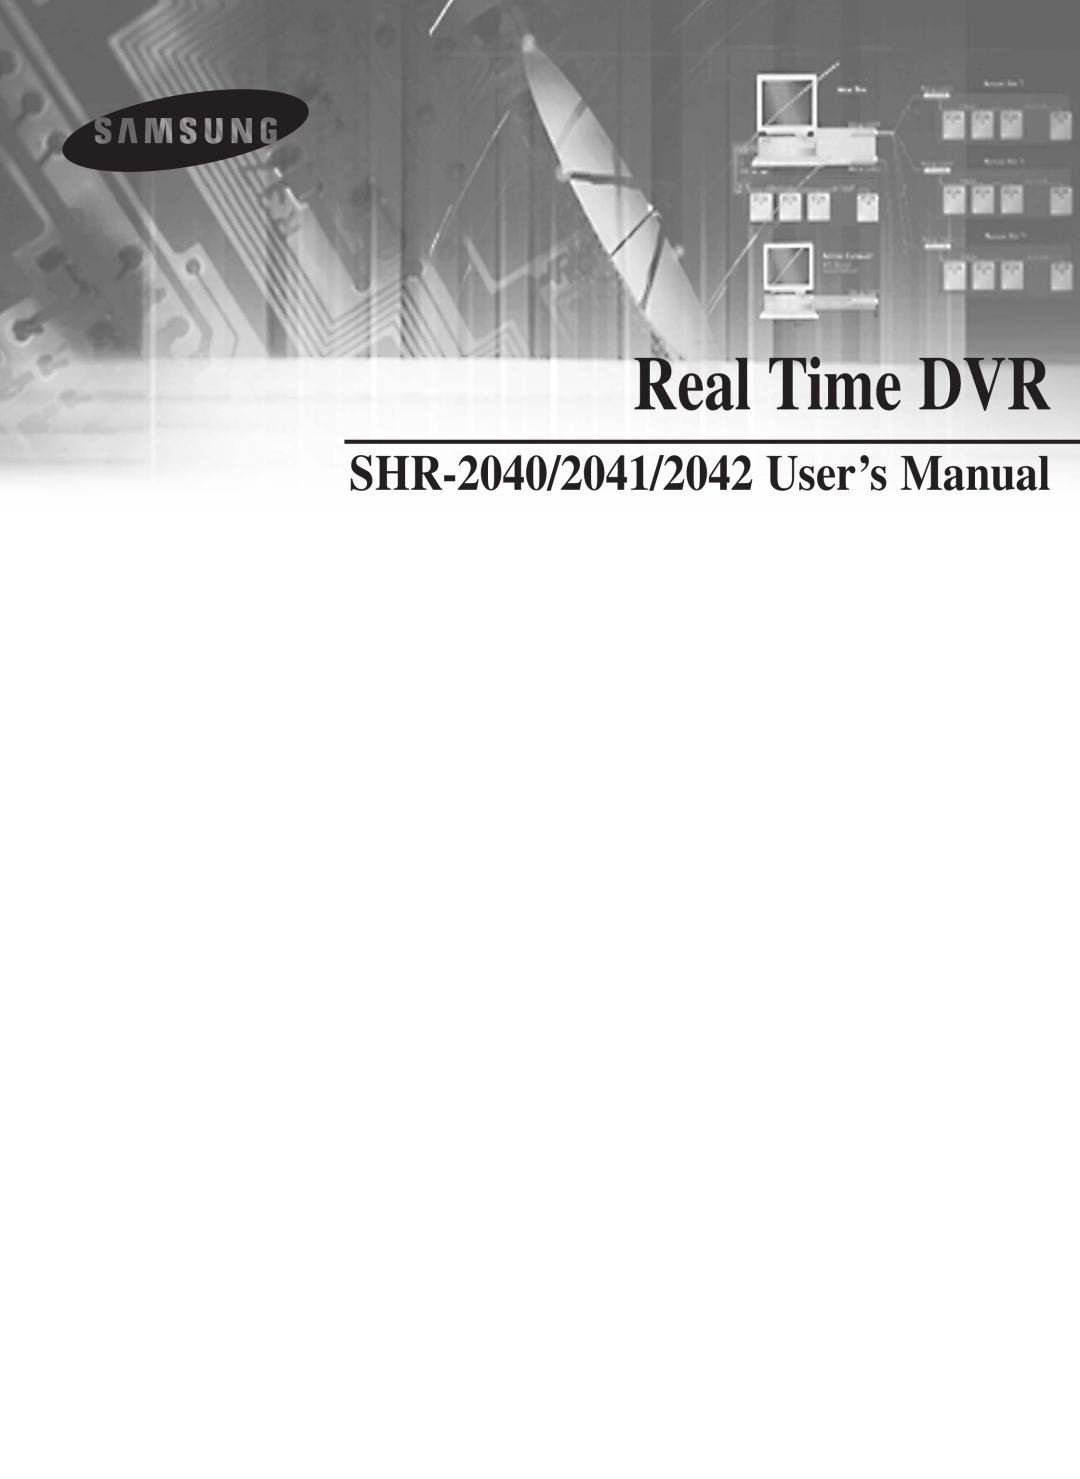 Samsung SHR-2040P250, SHR-2042P250 manual Real Time DVR, SHR-2040/2041/2042 User’s Manual, English 